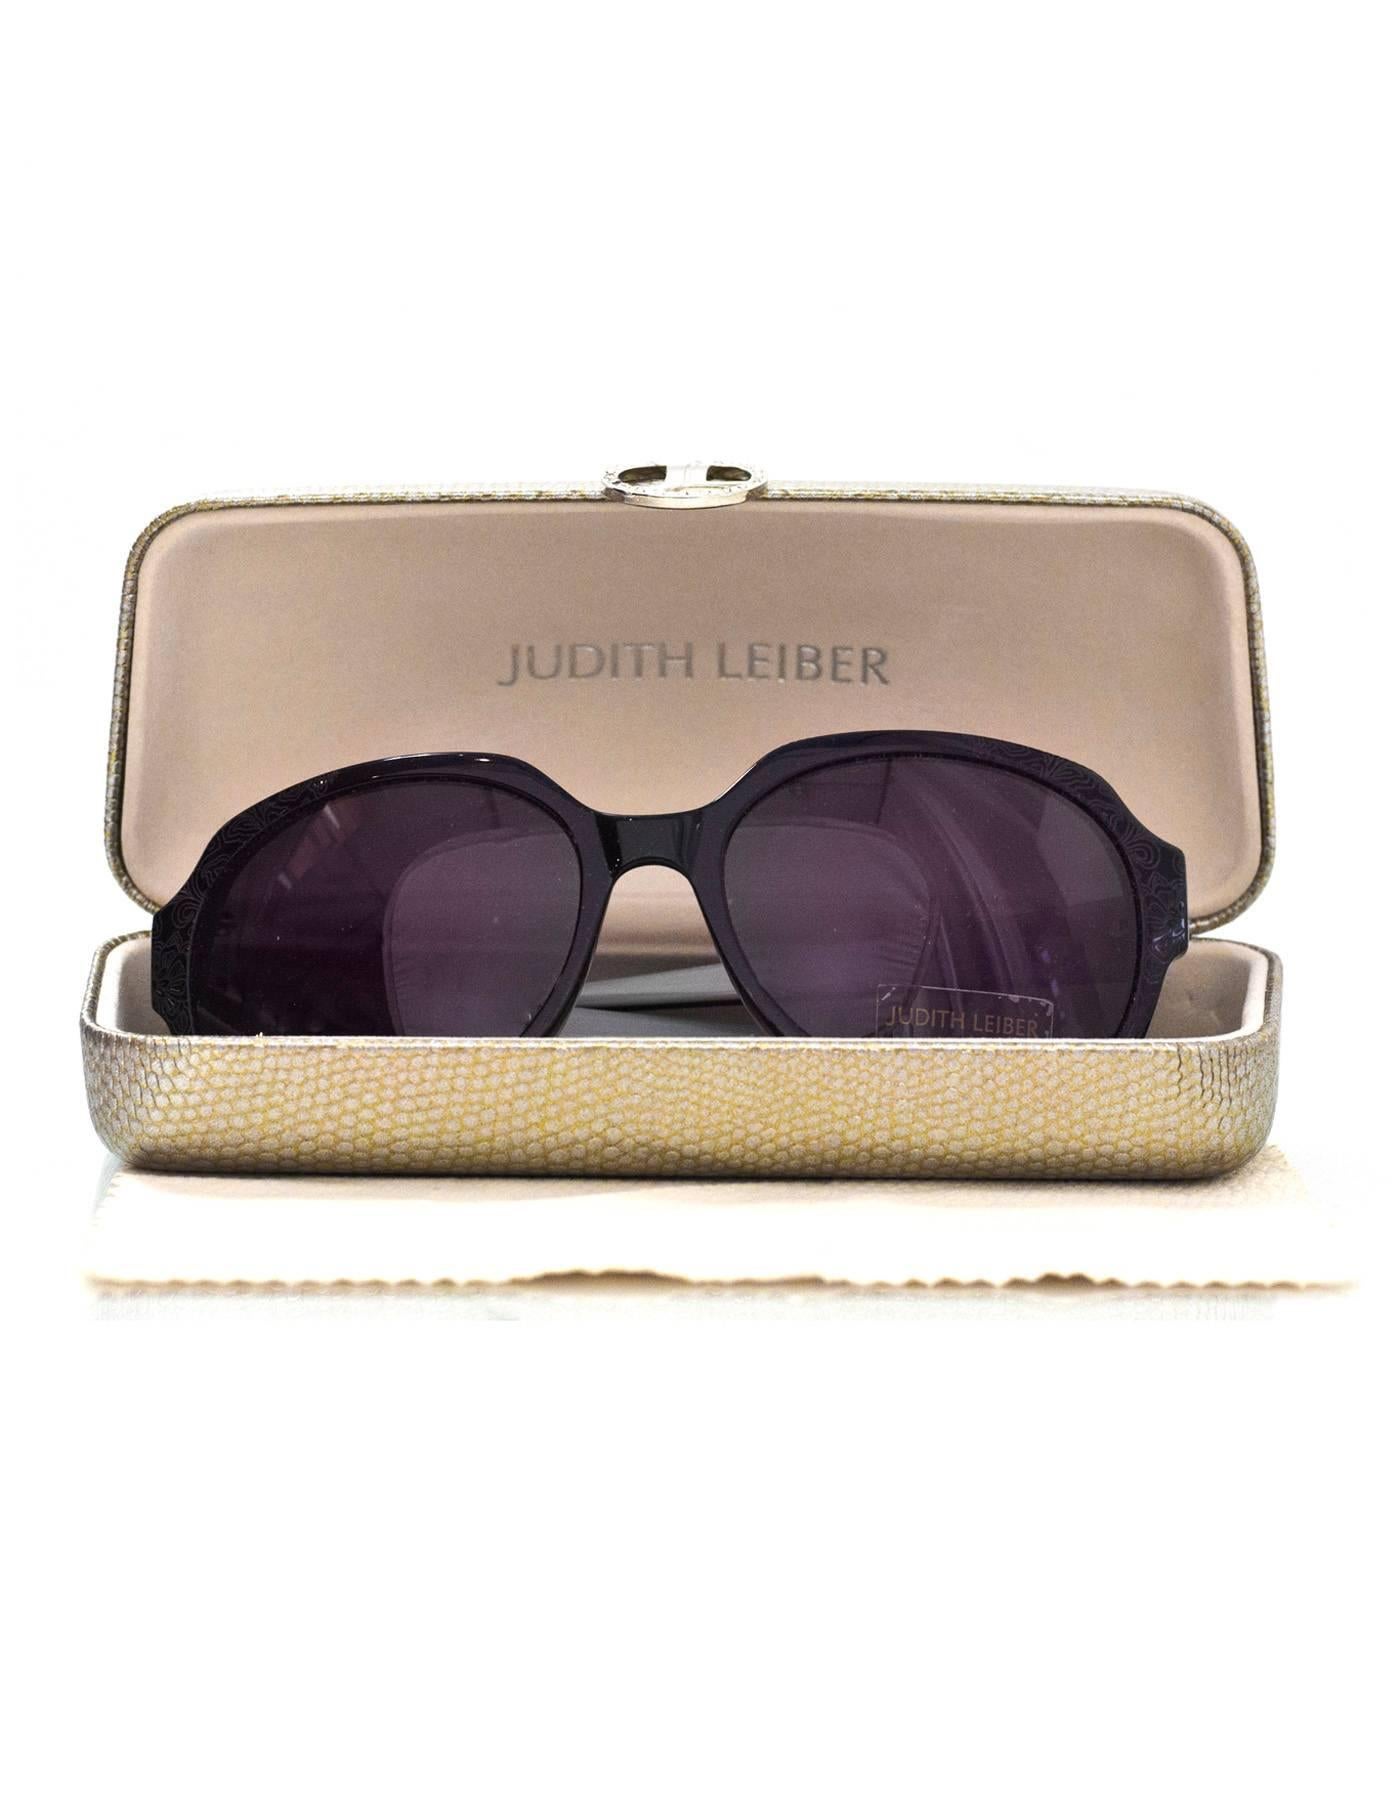 Judith Leiber JL1169 Black Swarovski Crystal Sunglasses with Case 4